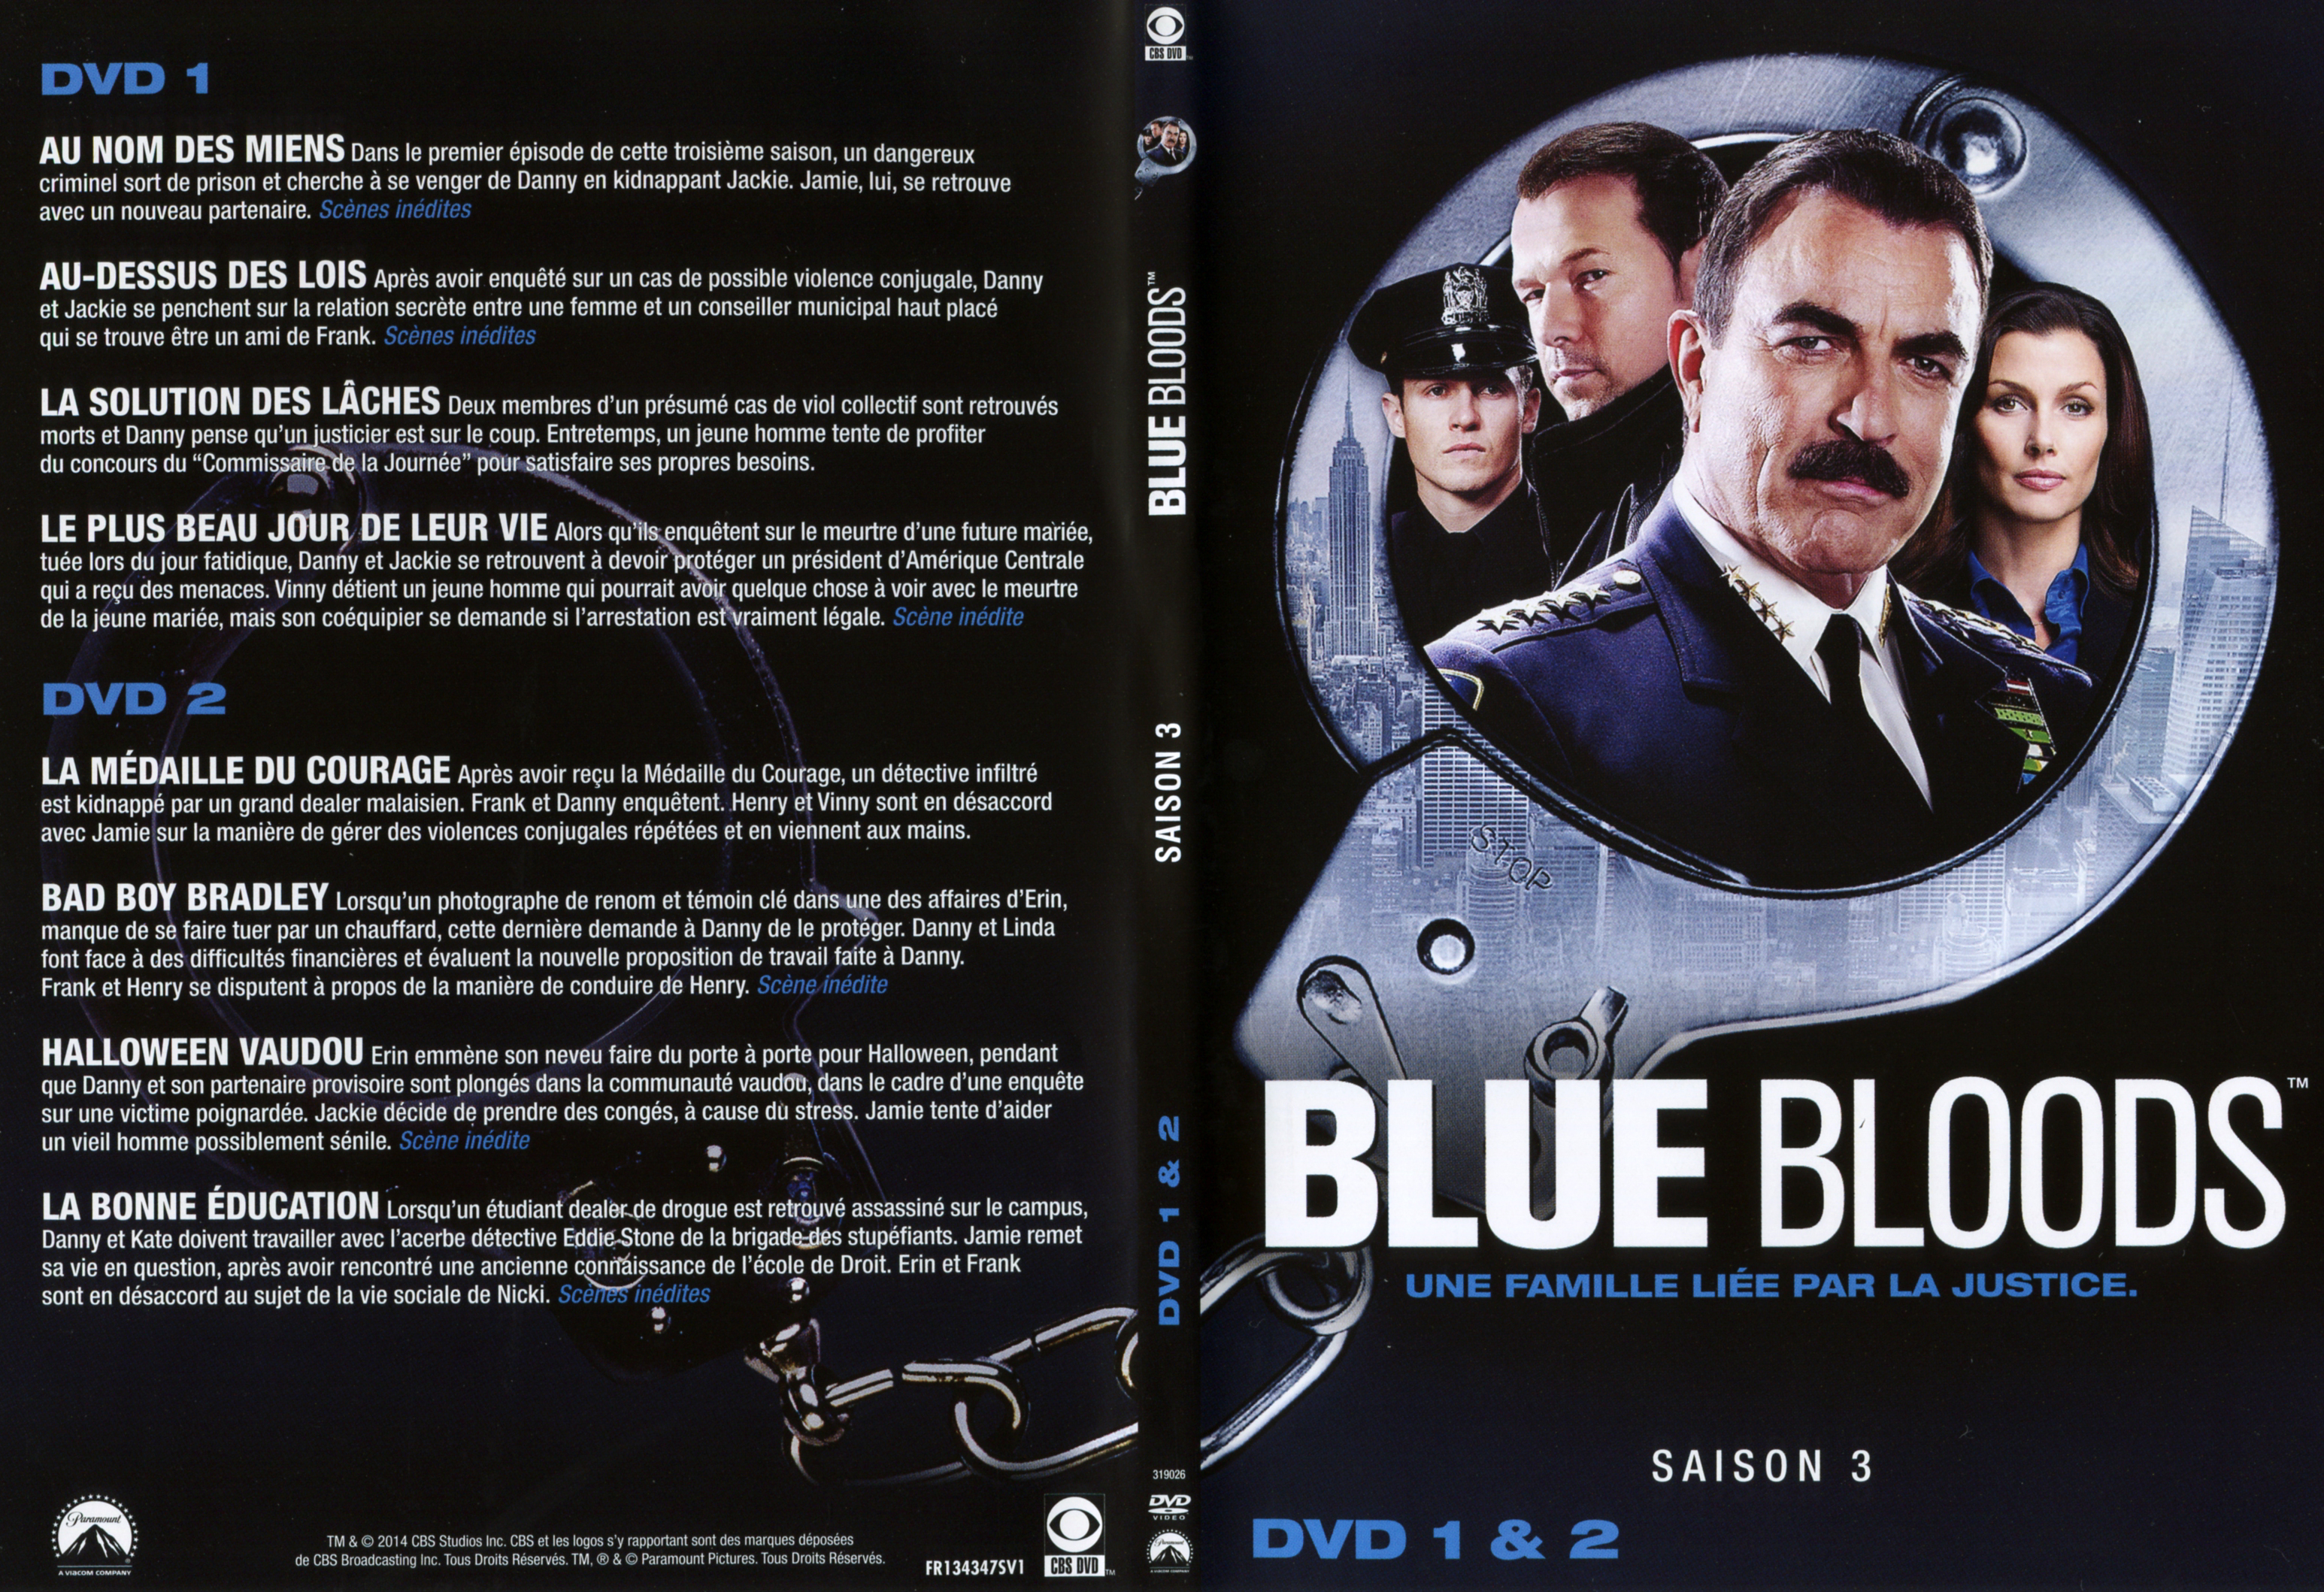 Jaquette DVD Blue Bloods saison 3 DVD 1